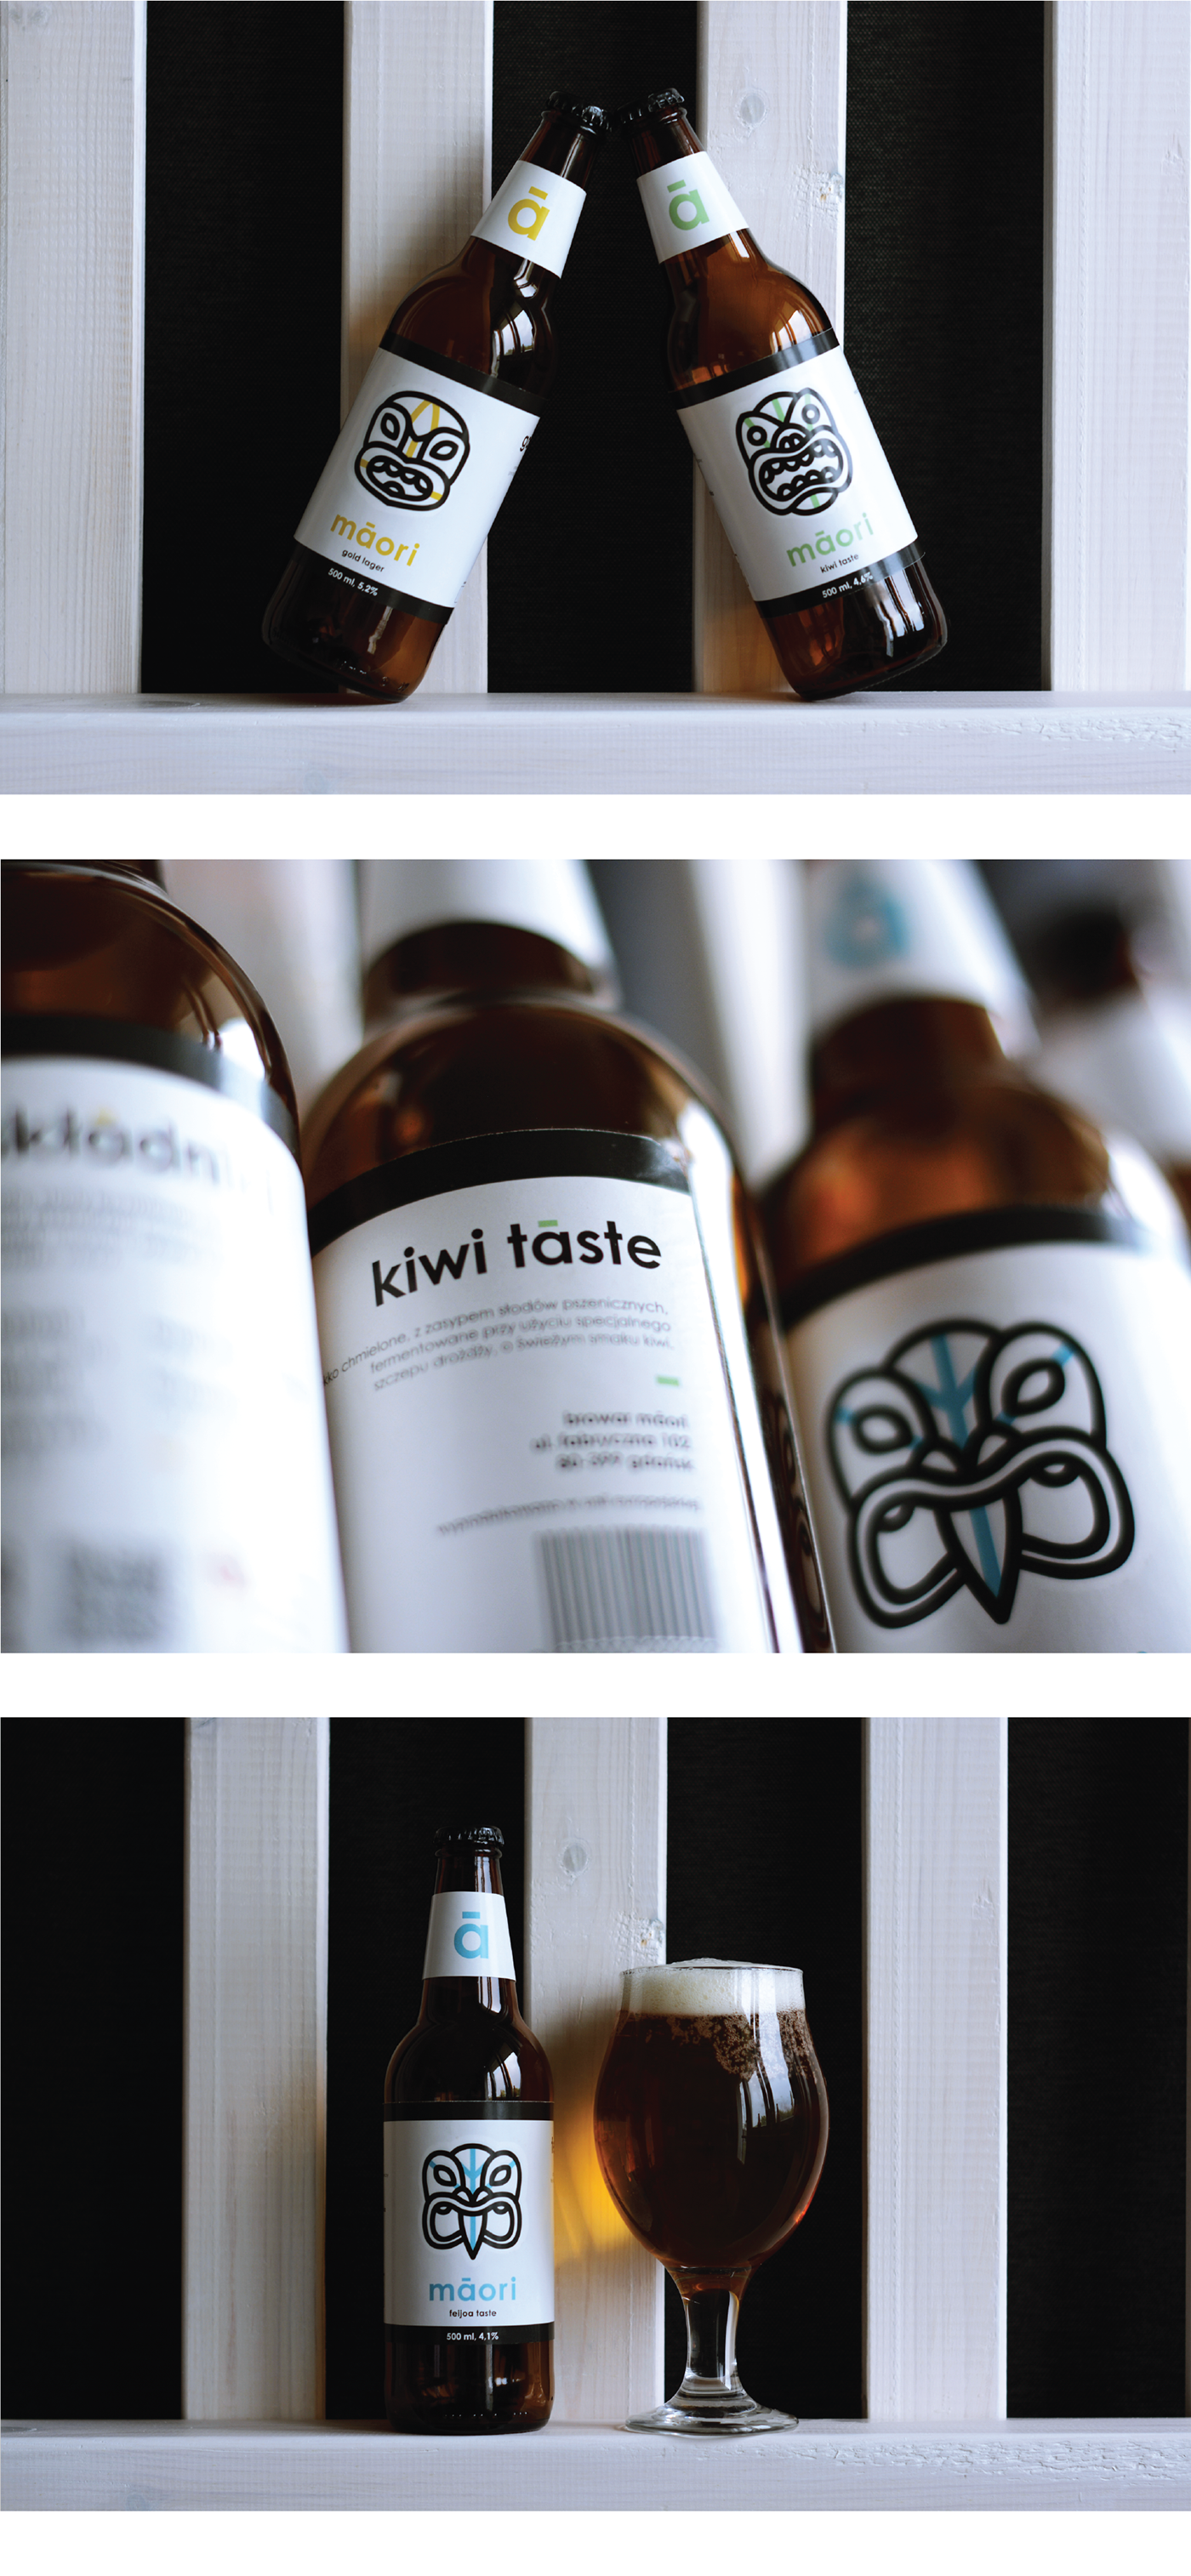 beer Label maori newzealand alcohol masks craftbeer design